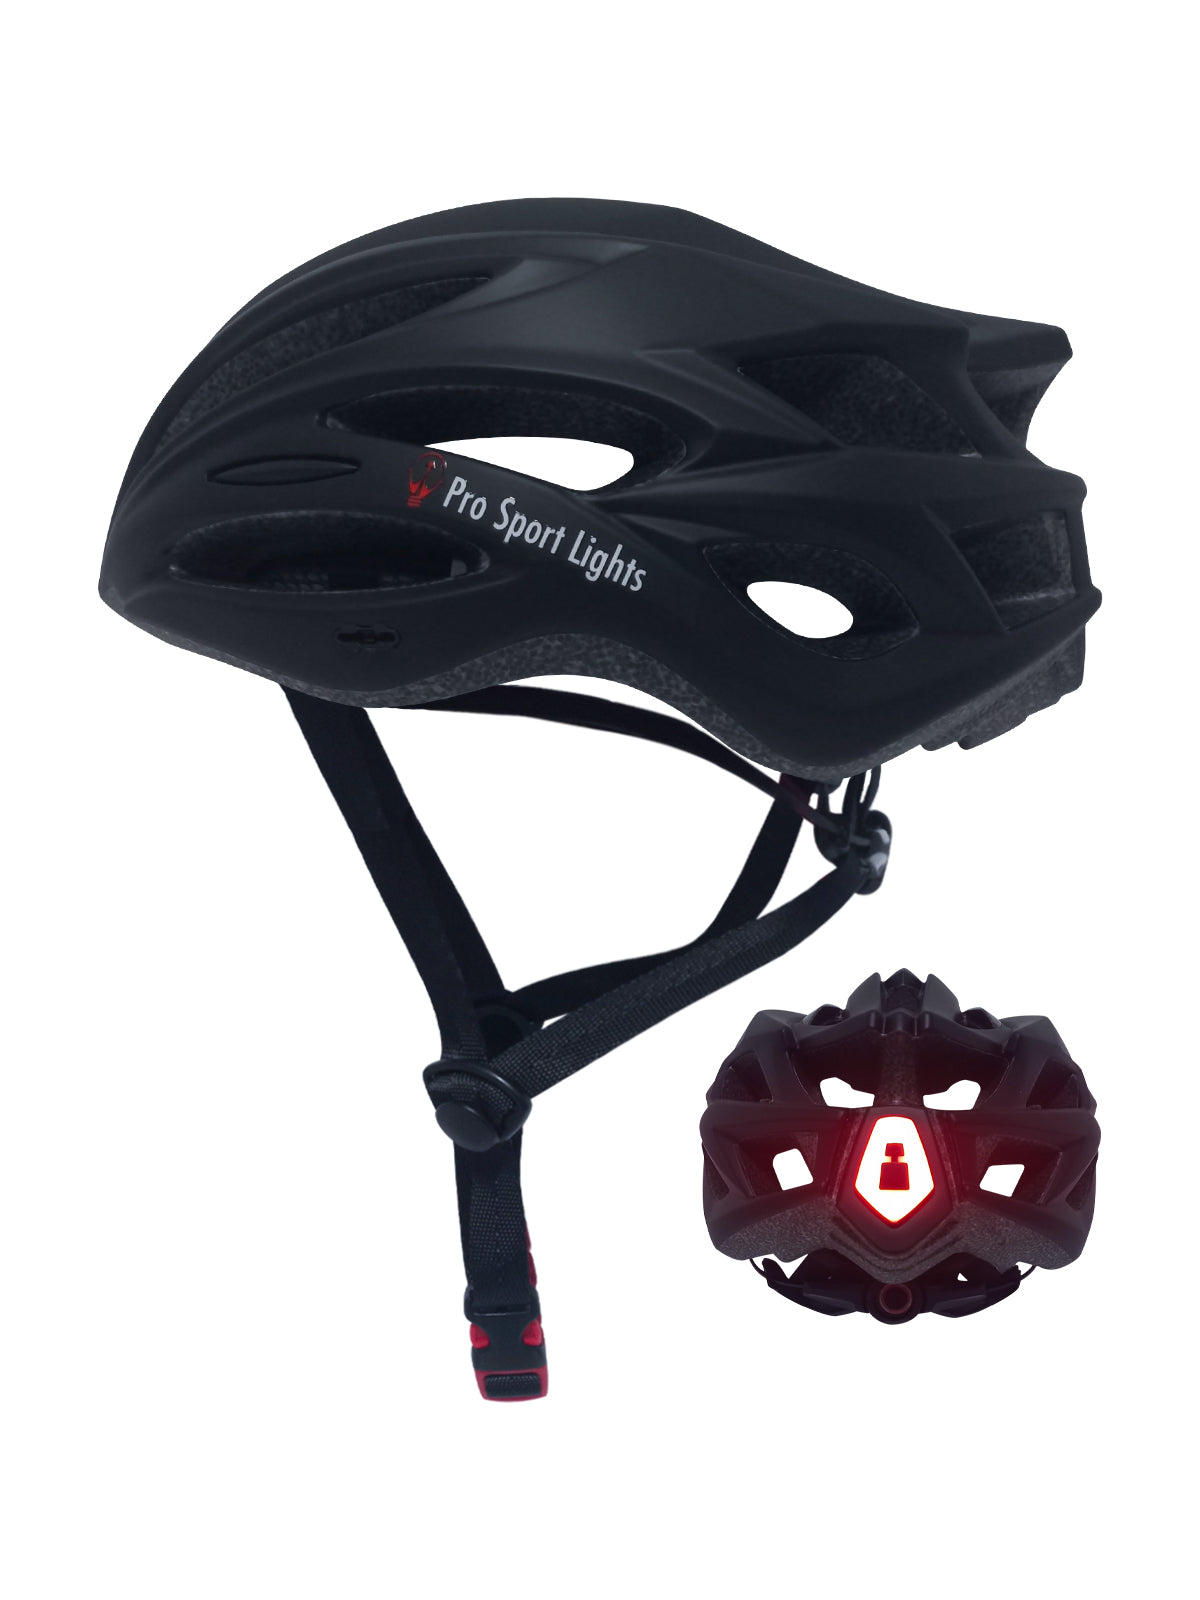 Bicycle Helmet Men/Women with Taillight - Black